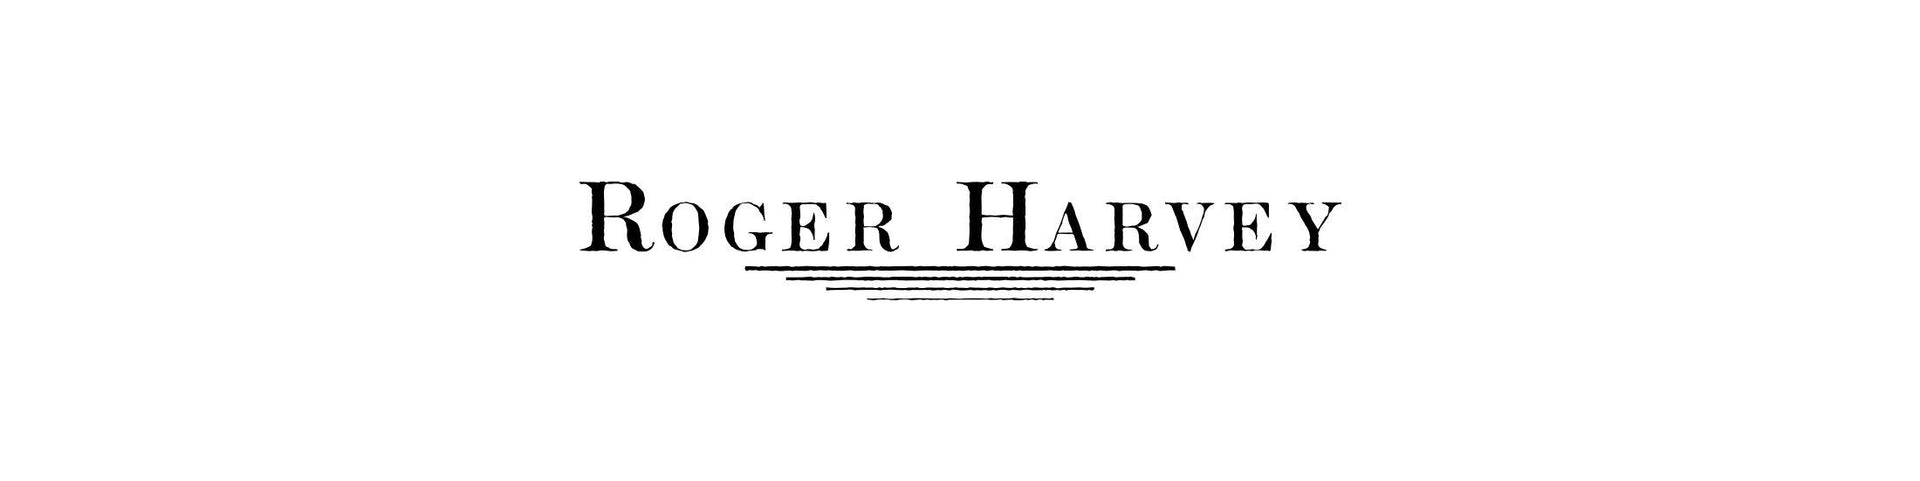 Shop – Roger Harvey – Band & Music Merch – Cold Cuts Merch